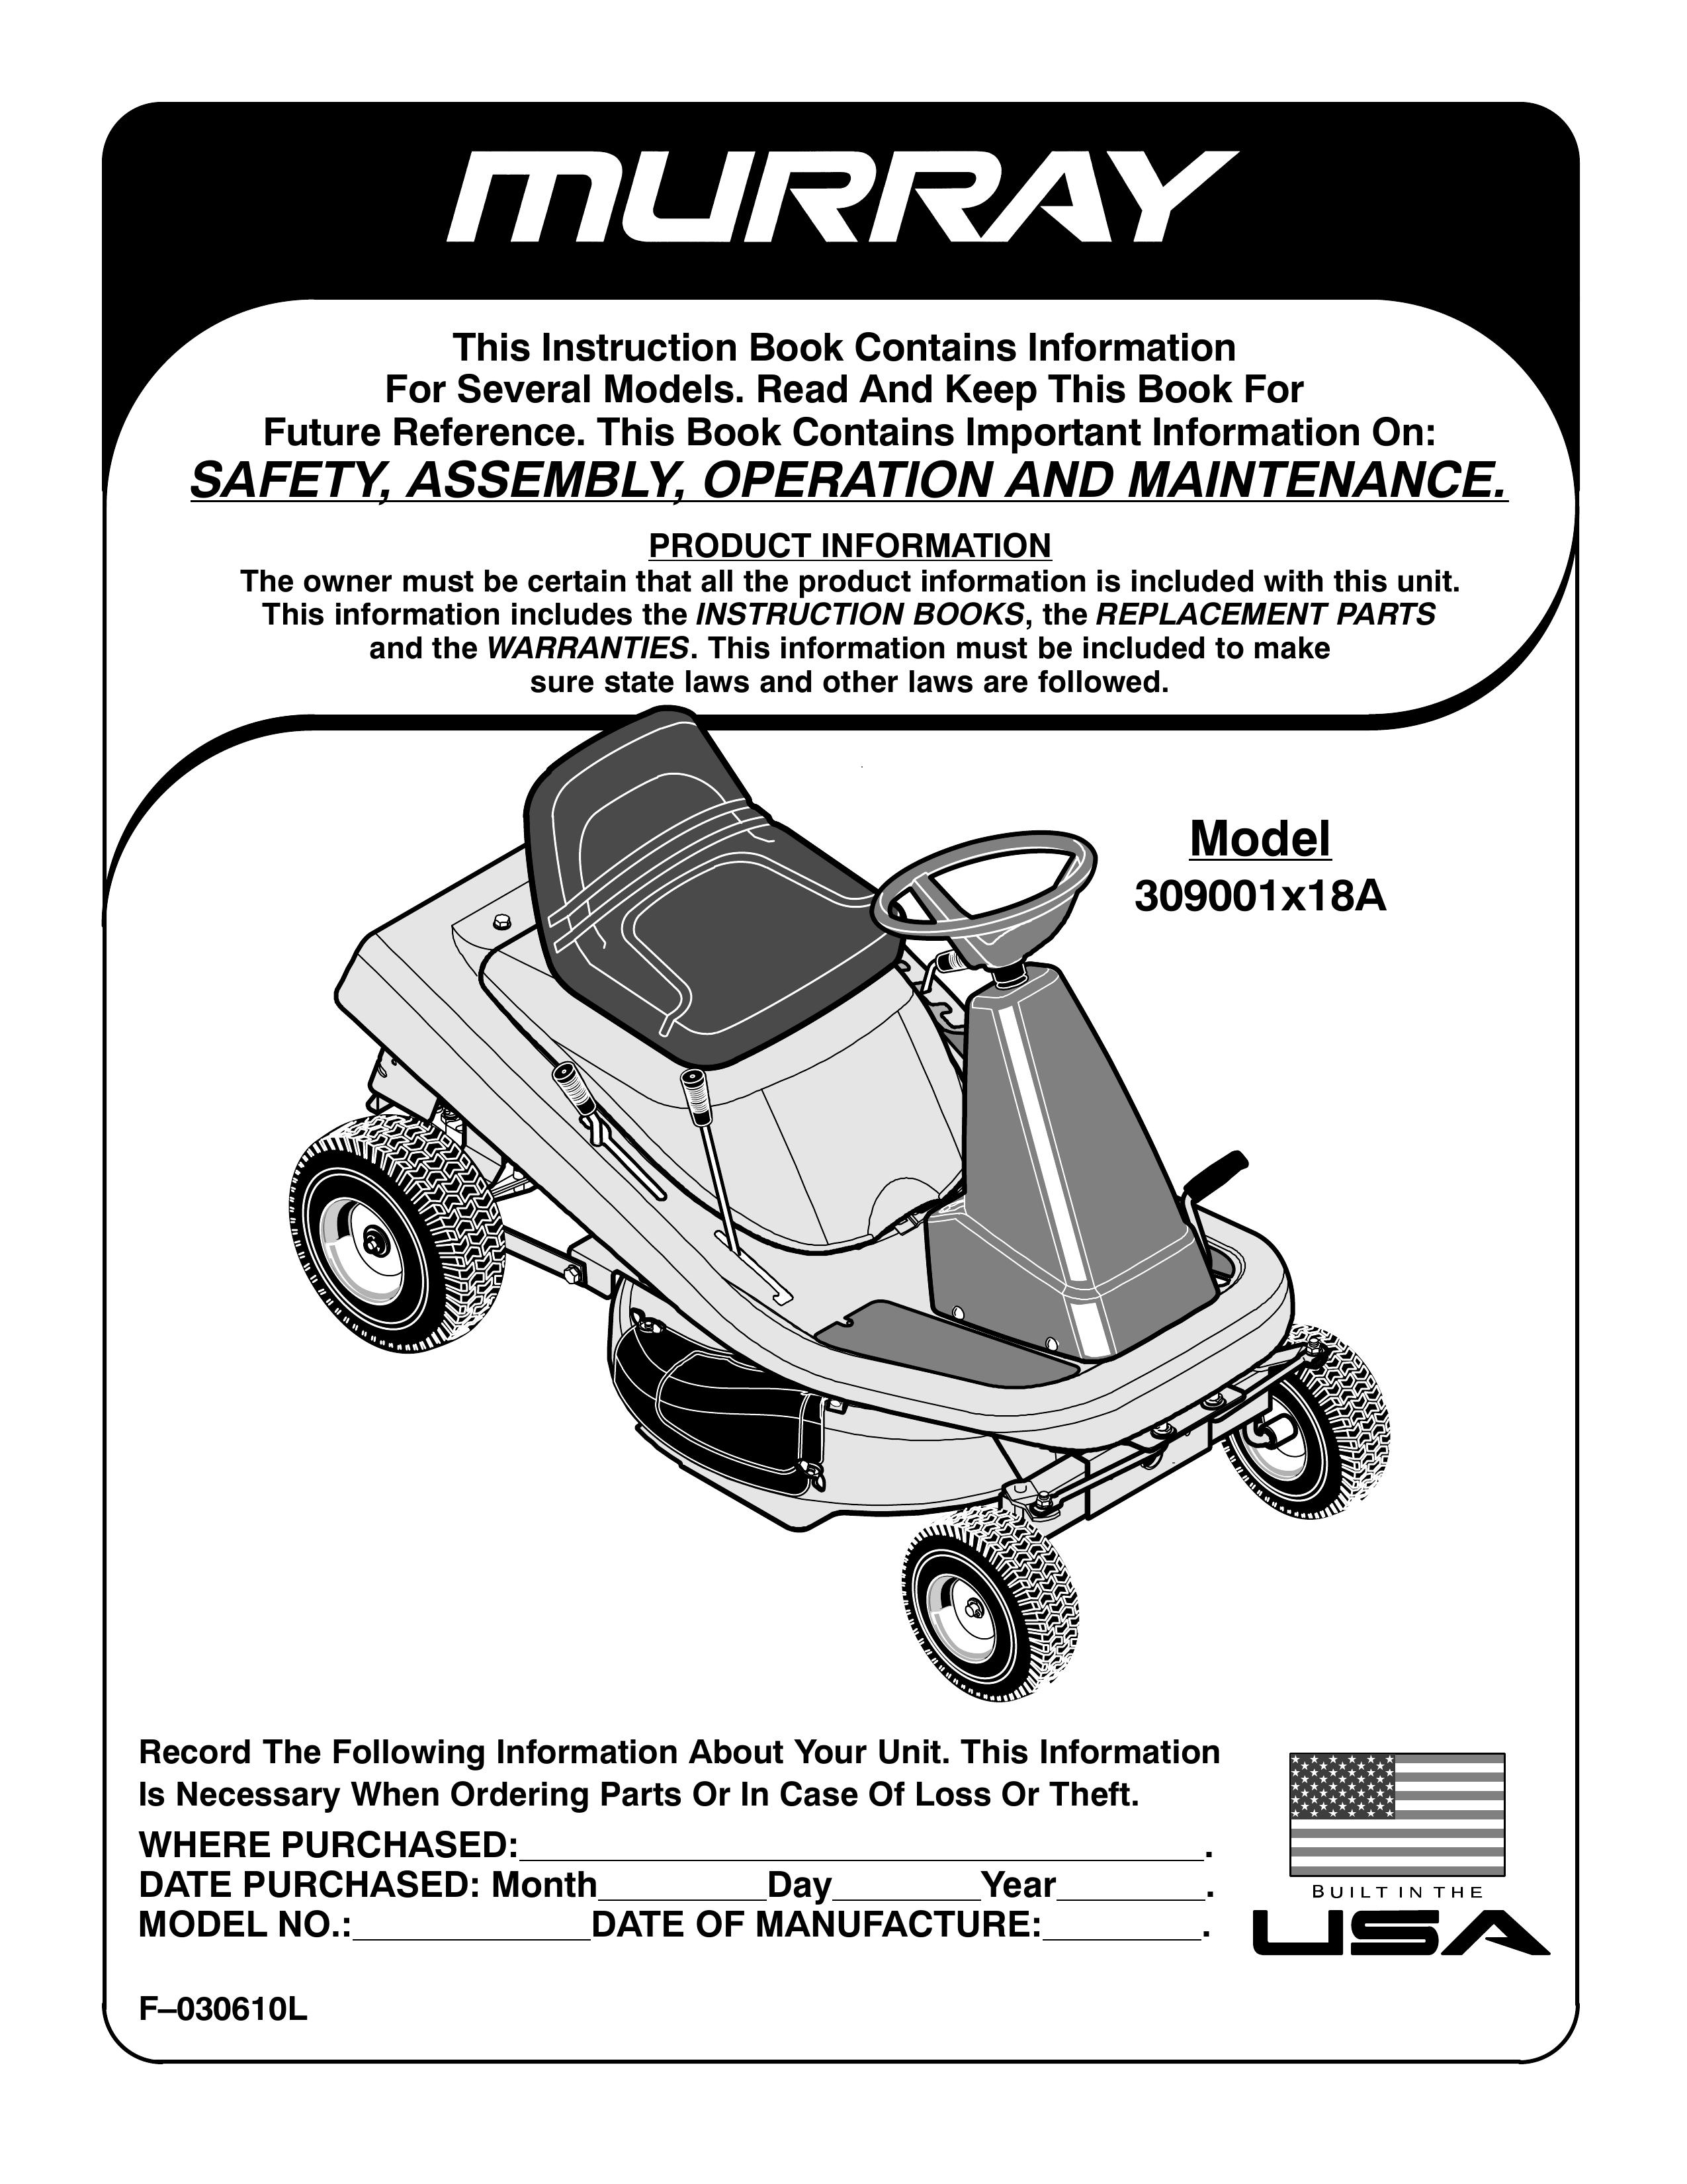 Murray 309001x18A Lawn Mower User Manual